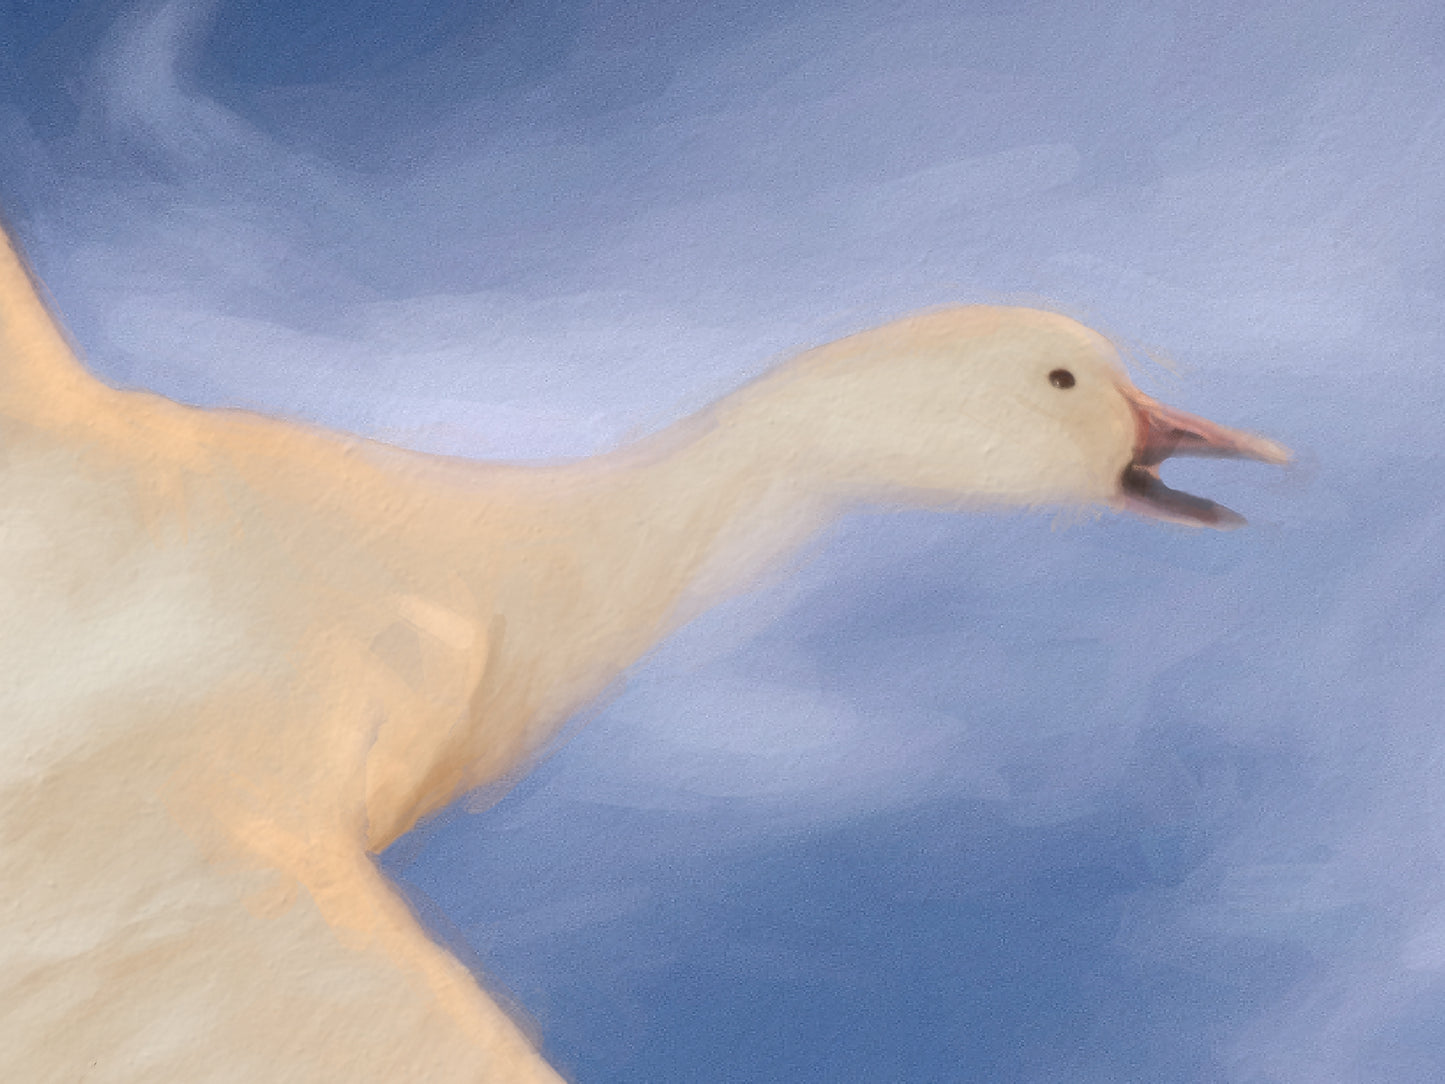 Adult Whit Morph - Bird in Flight on Canvas